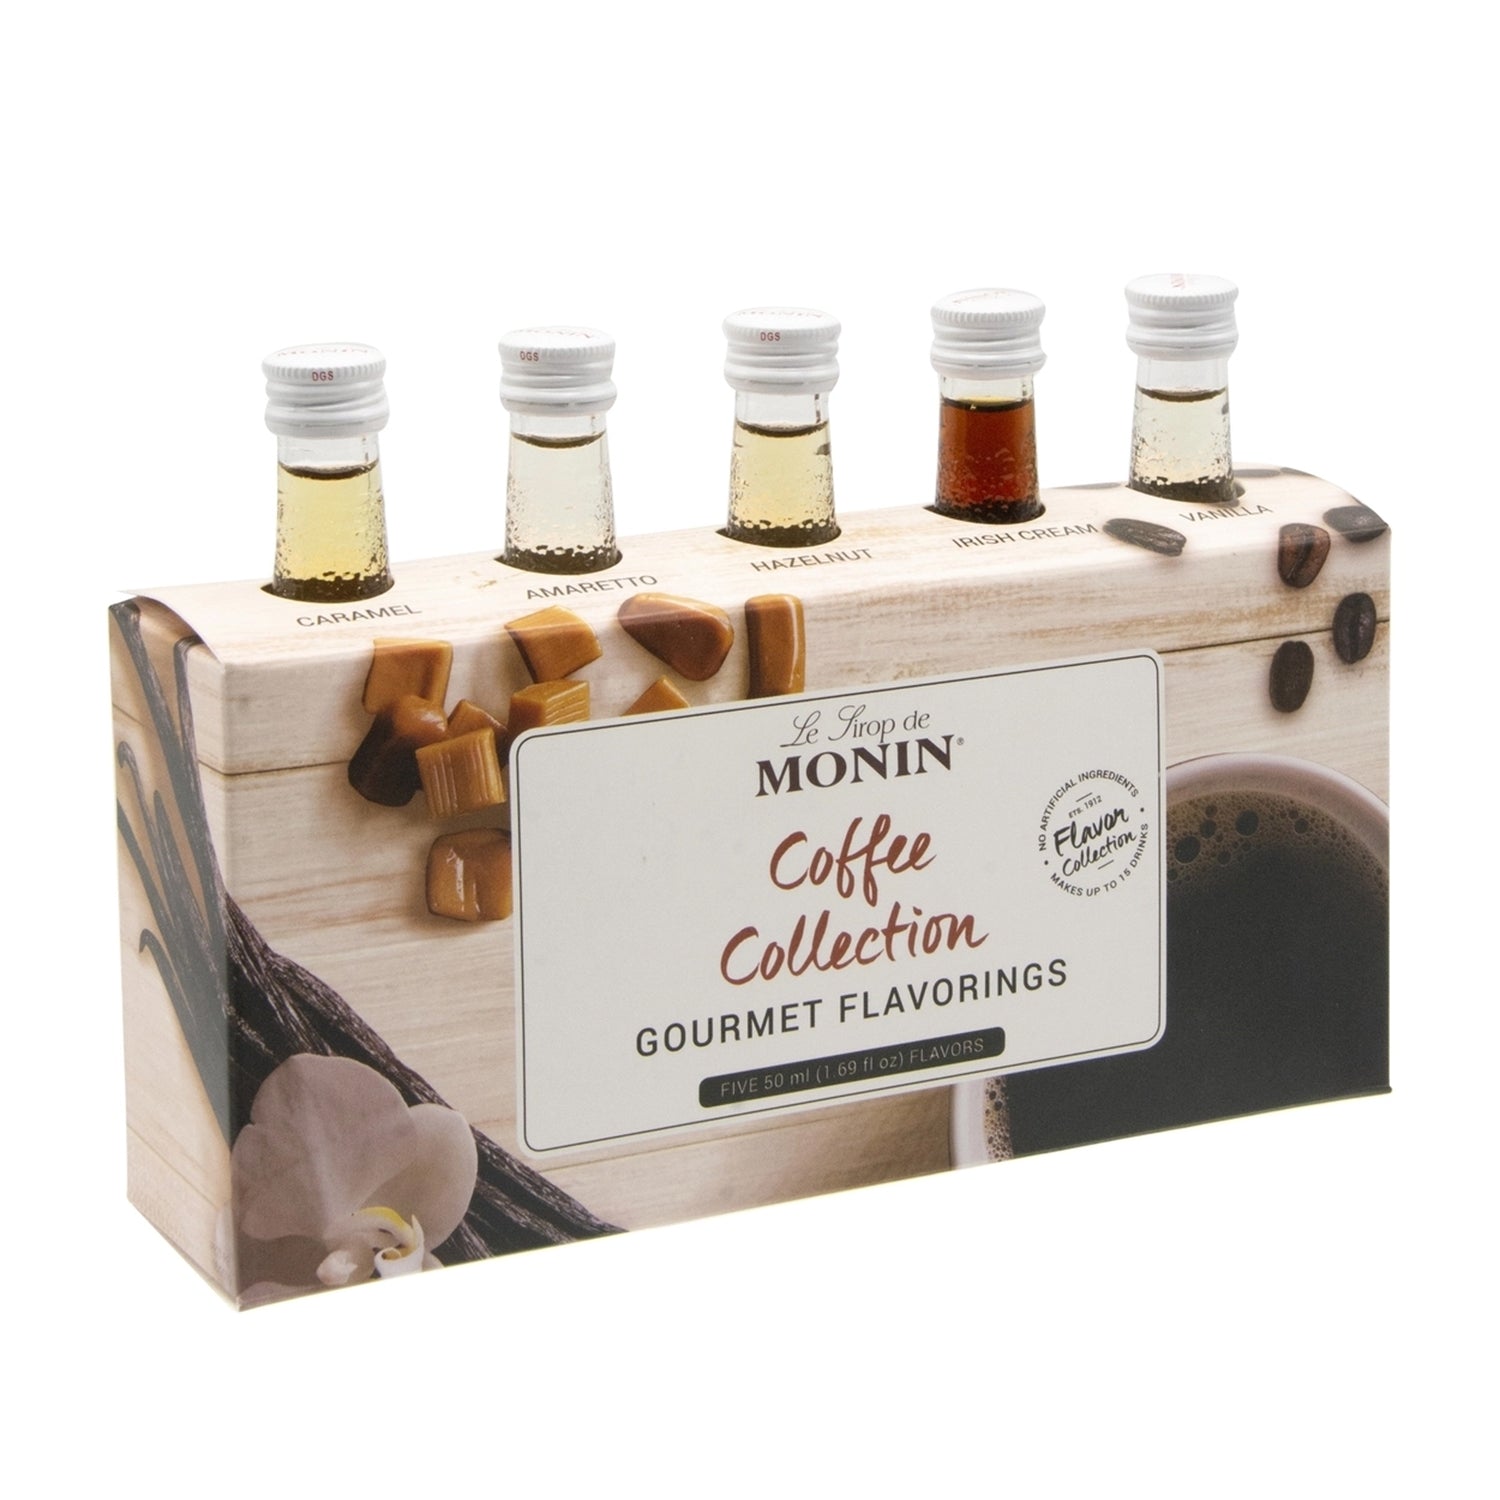 Monin Mini Coffee Collection Gourmet Flavorings in packaging